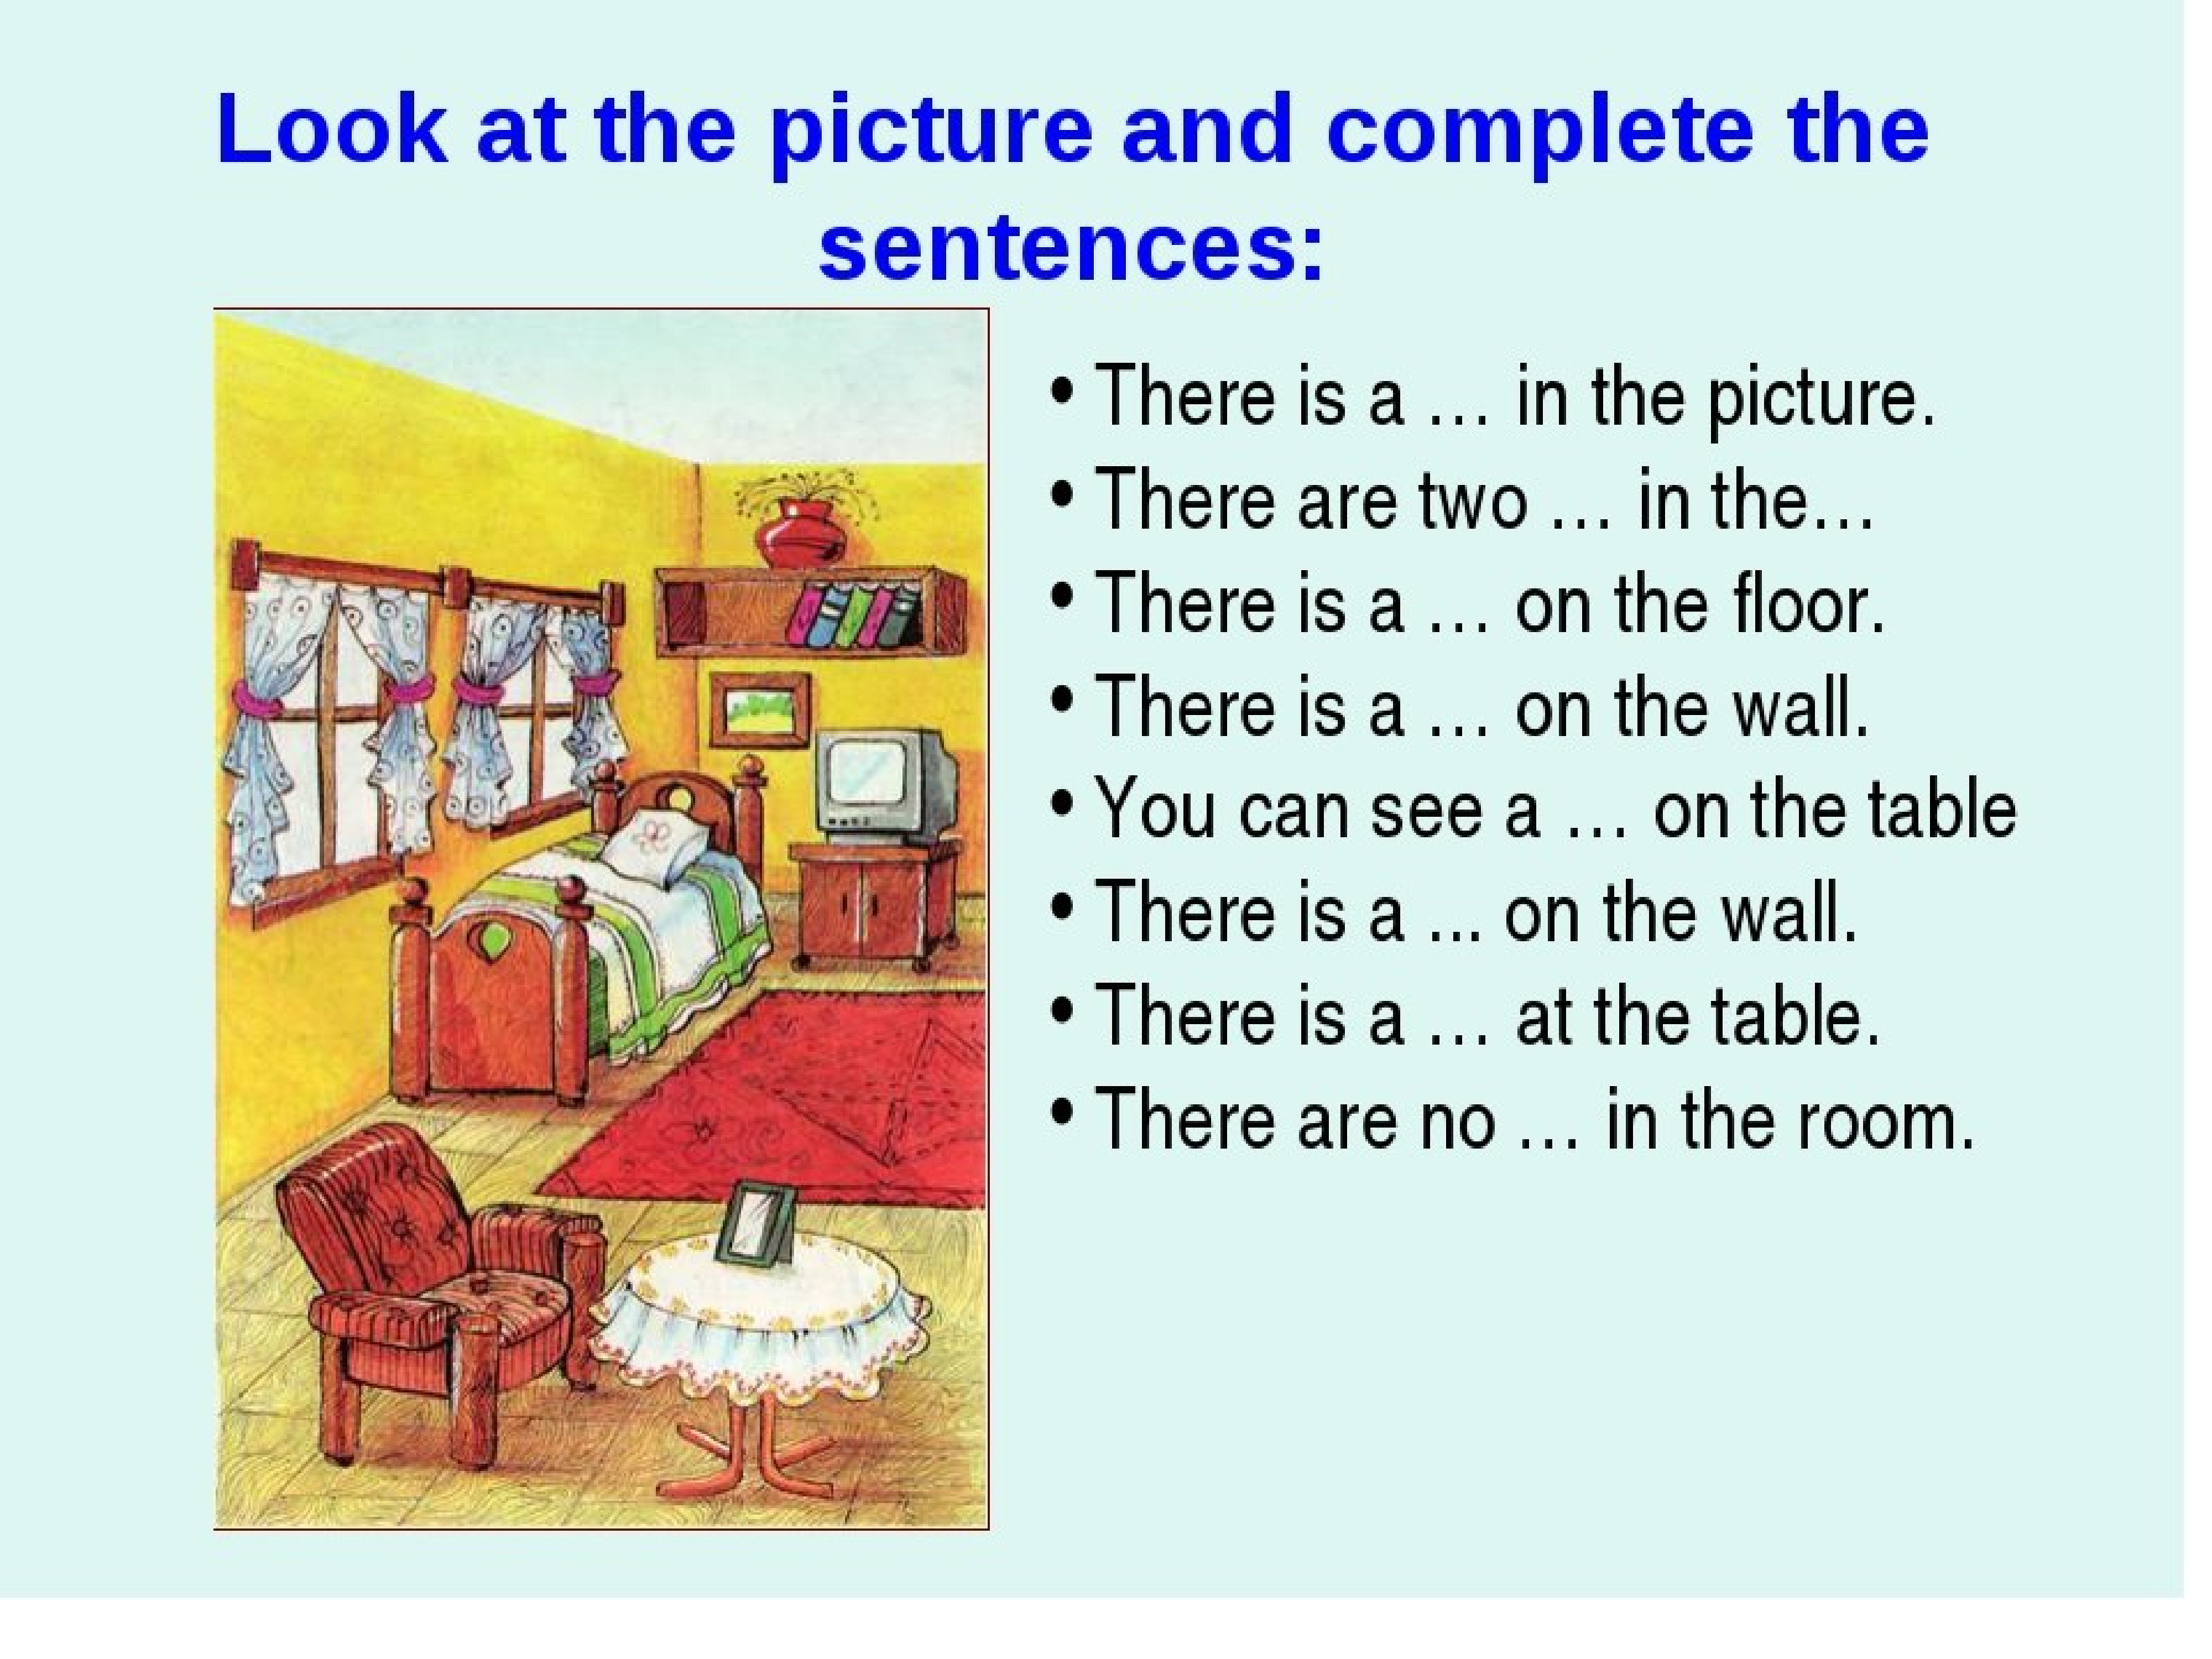 структура описания картинки на английском языке